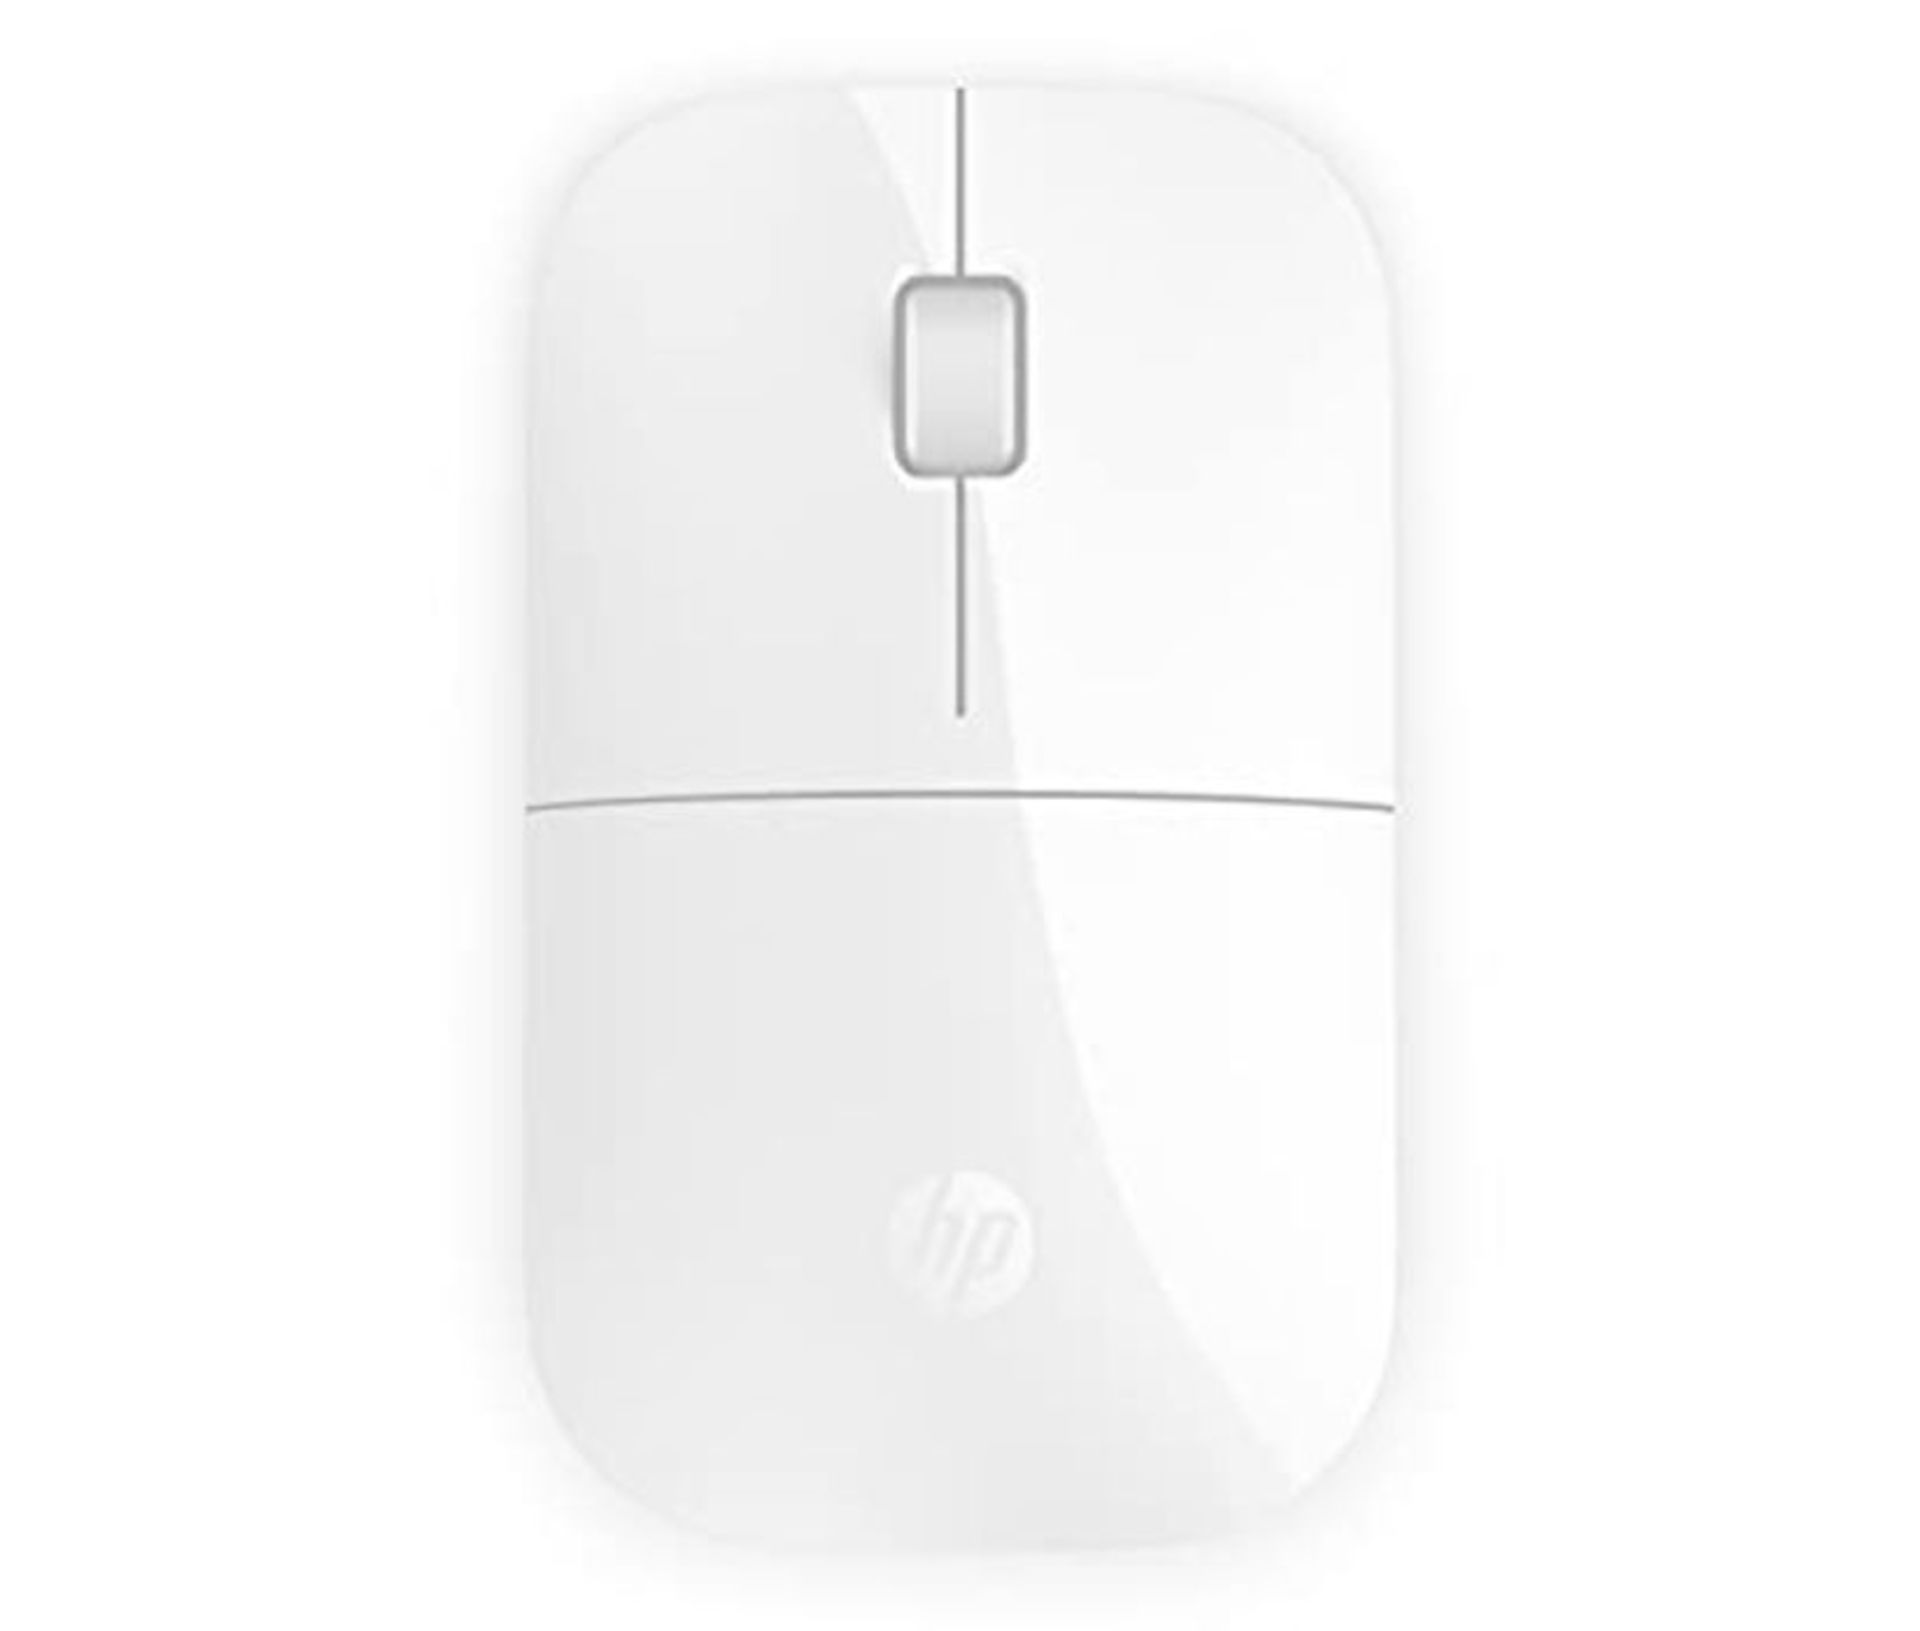 HP Z3700 White 2.4 GHz USB Slim Wireless Mouse with Blue LED1200 DPI Optical Sensor, U